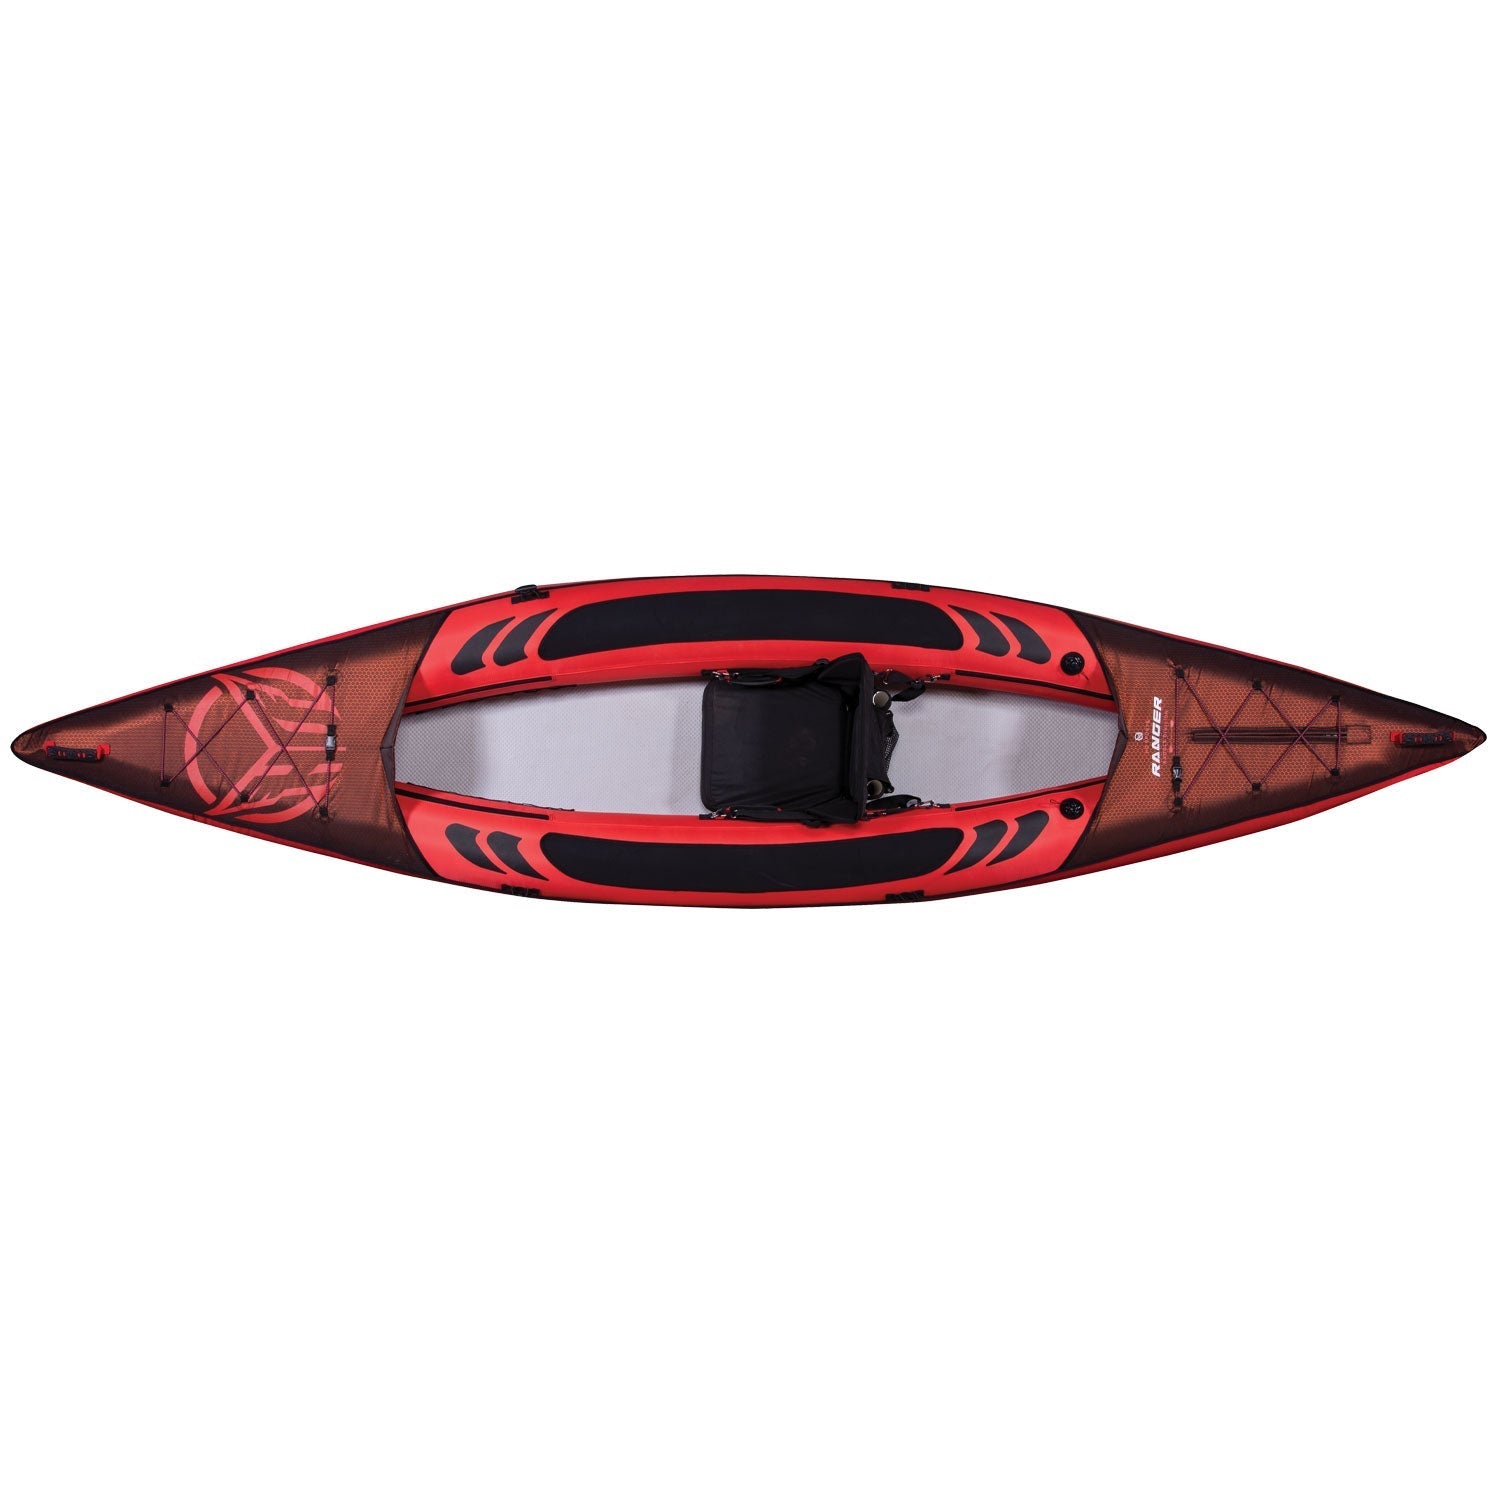 HO Sports Ranger 1 iKayak - Inflatable Kayak